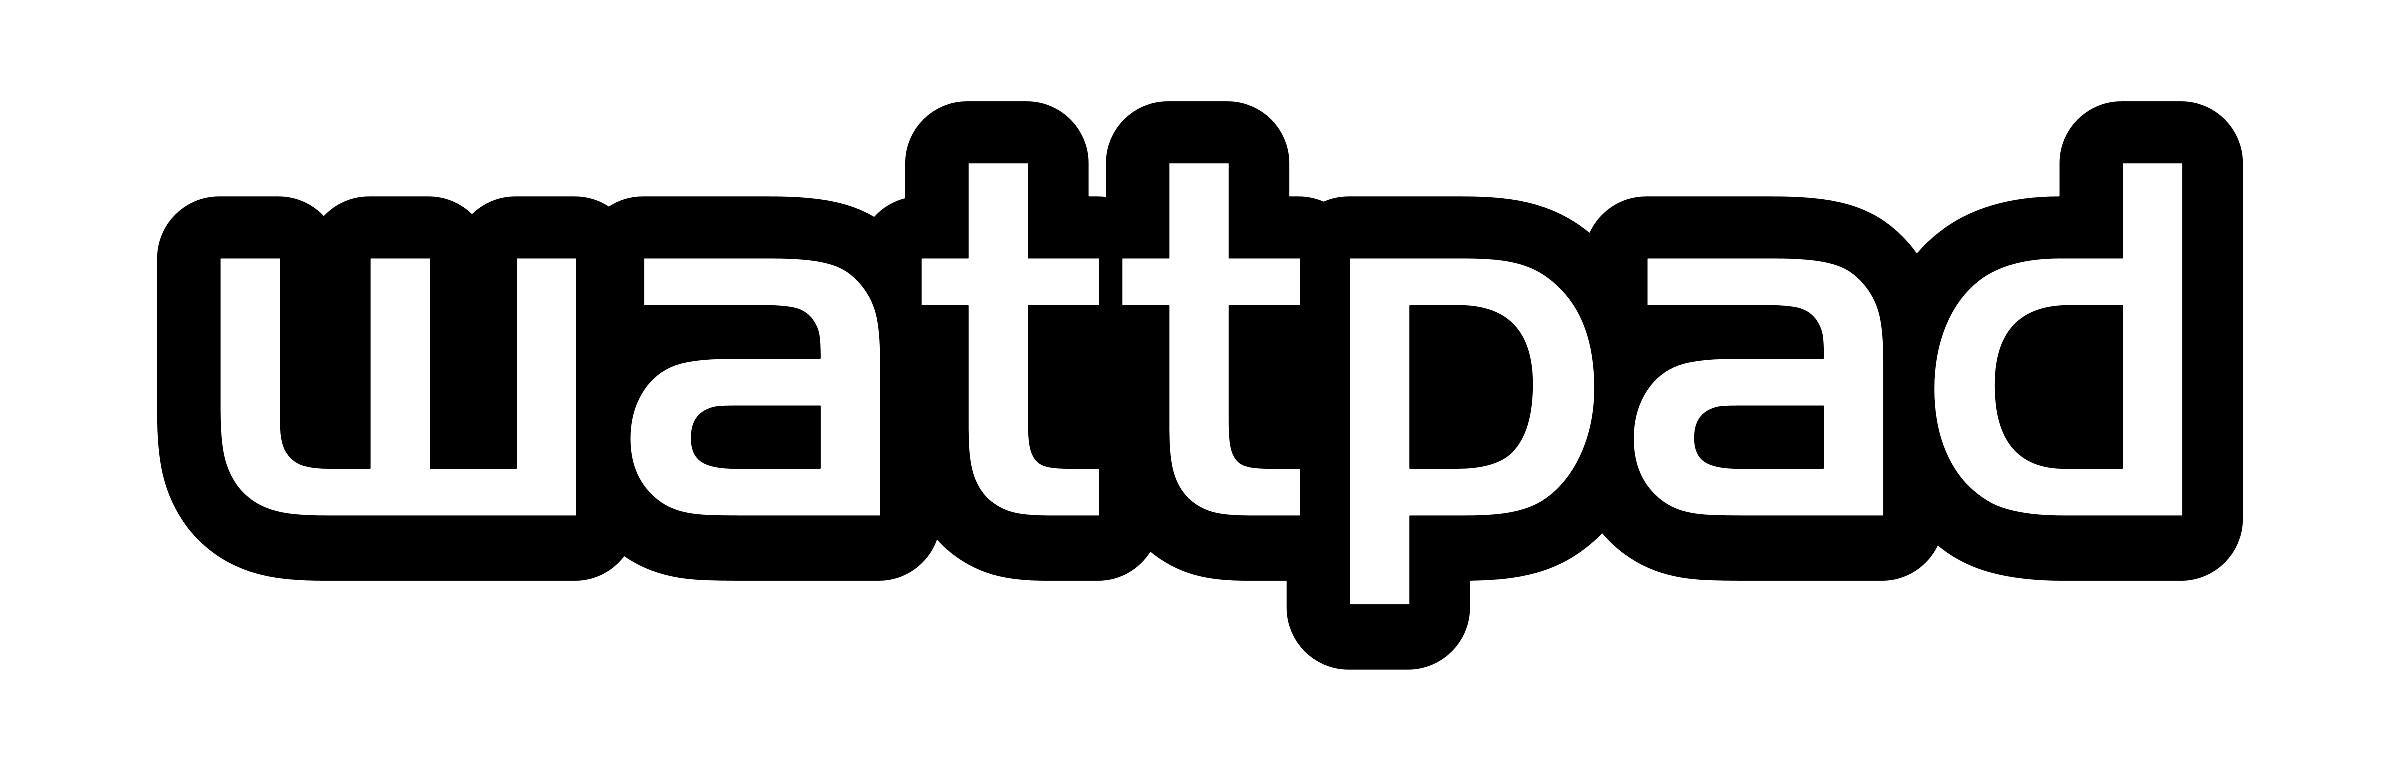 Wattpad Logo - Wattpad Logo PNG Transparent & SVG Vector - Freebie Supply